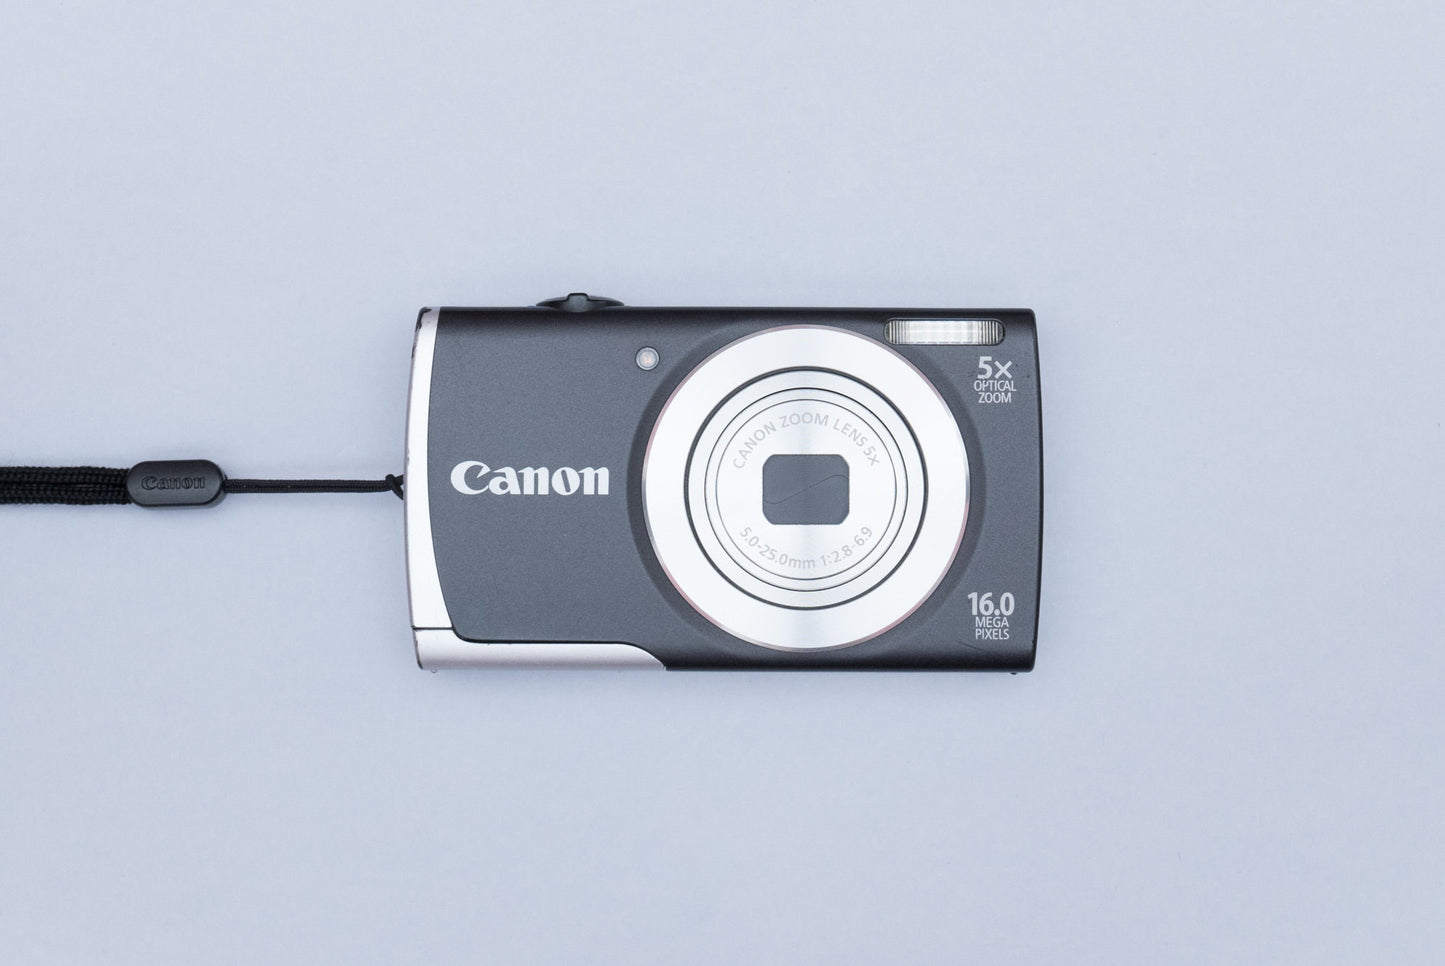 Canon PowerShot A2500 Compact Digital Camera